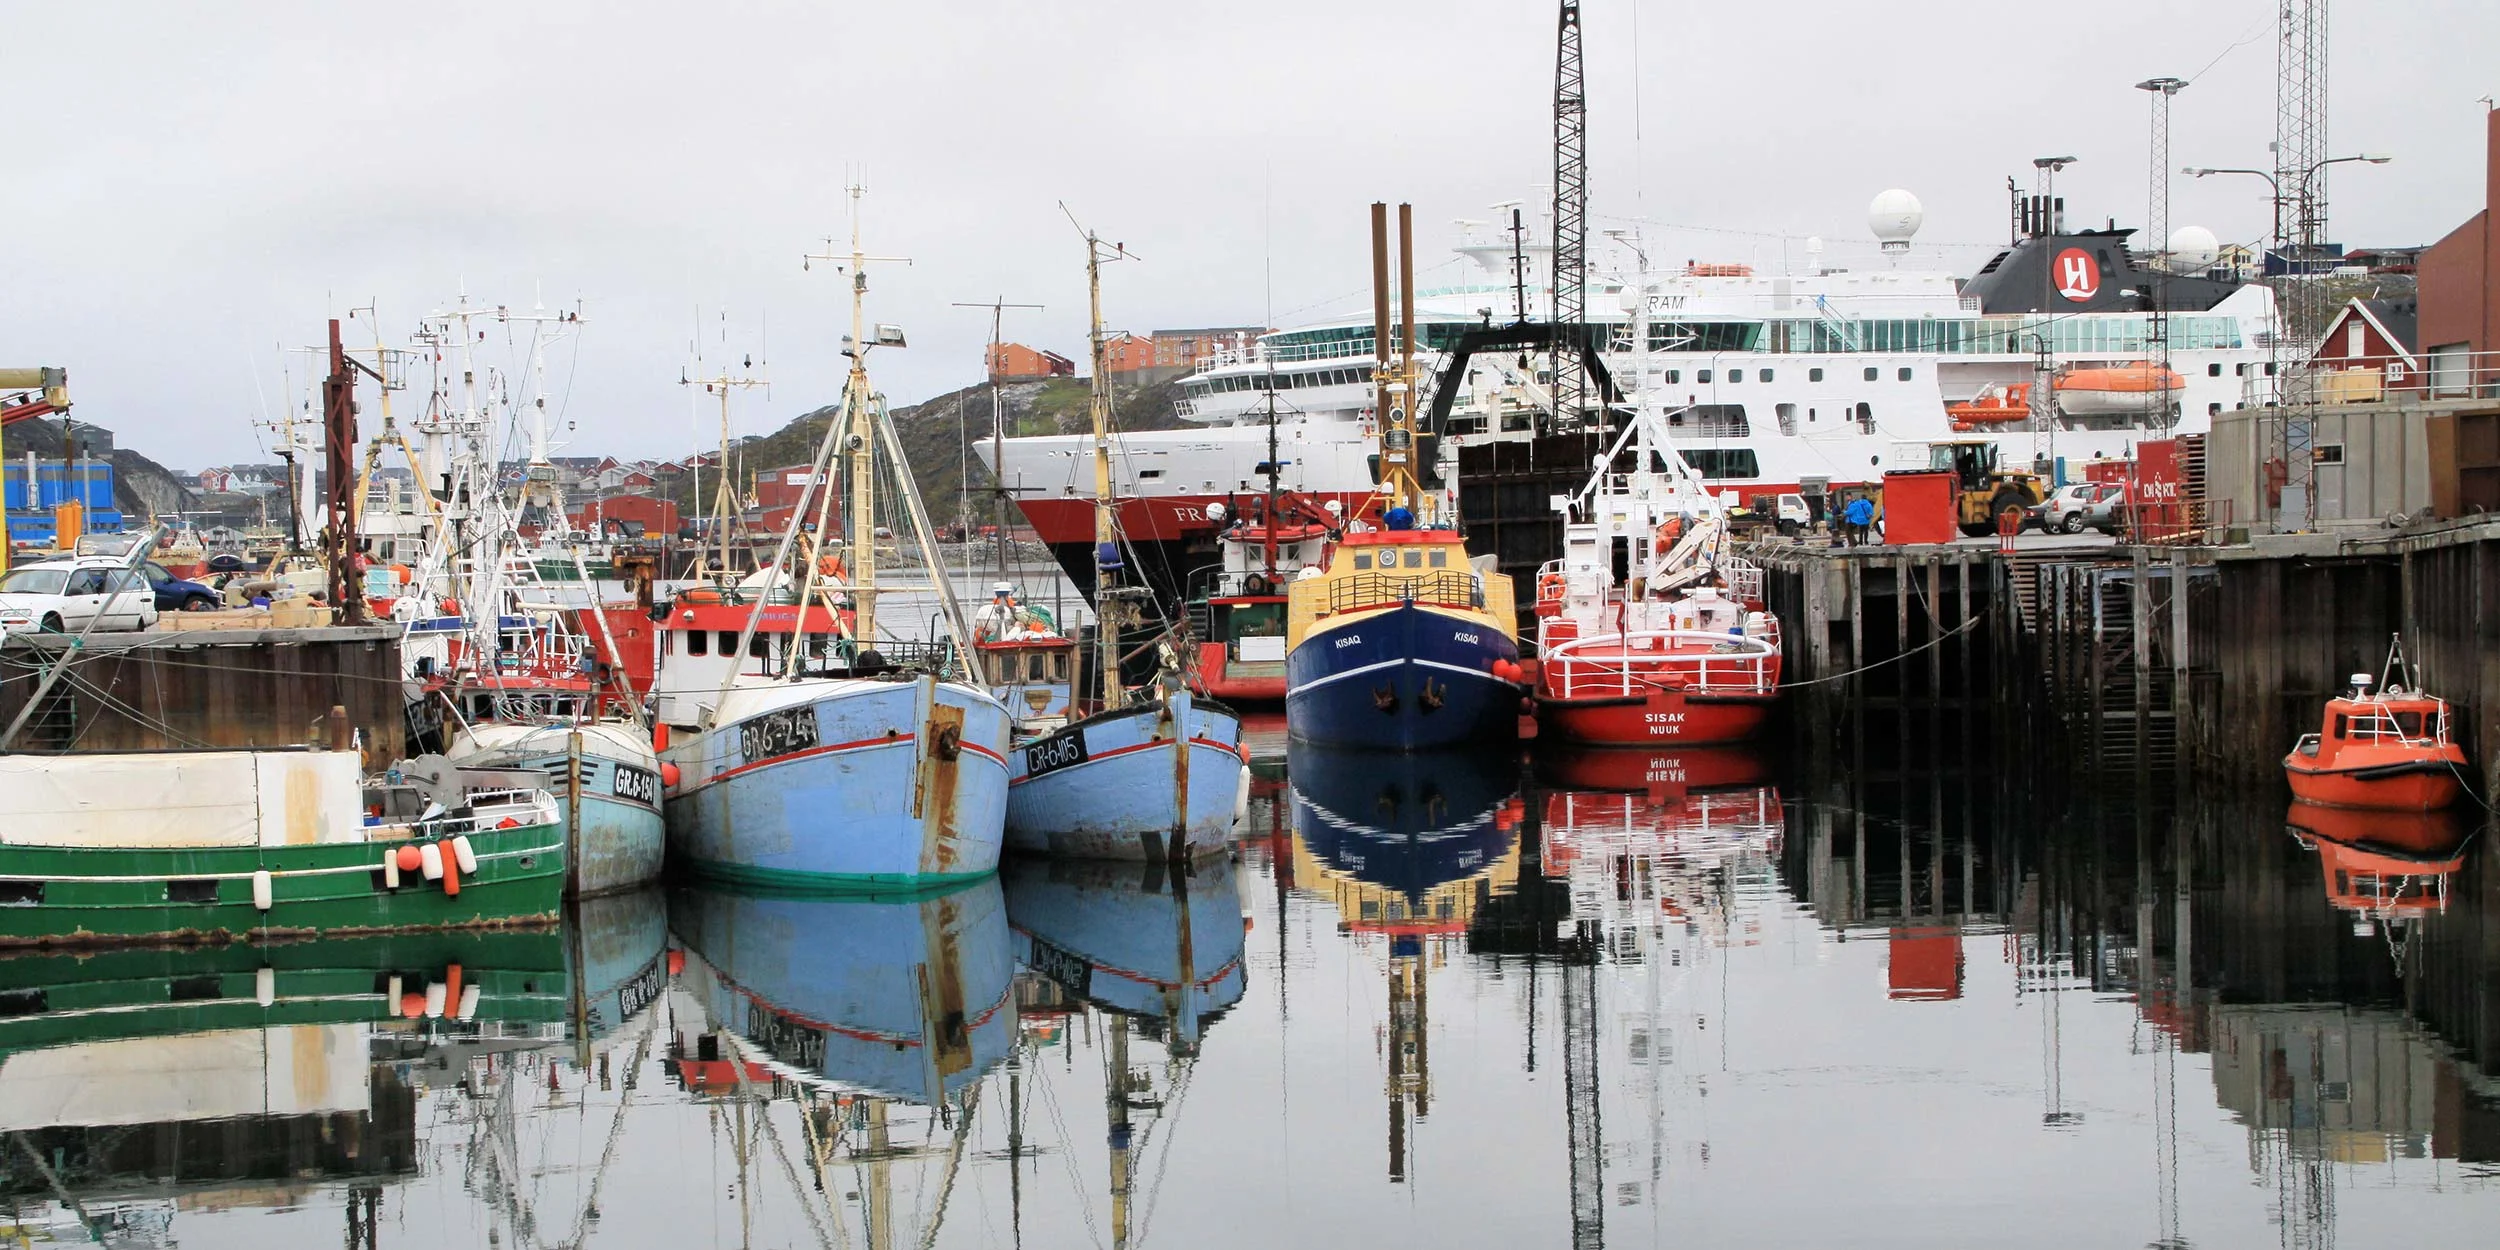 2500x1250 img 7909 ms fram nuuk harbor fishing boats leslie a. kelly